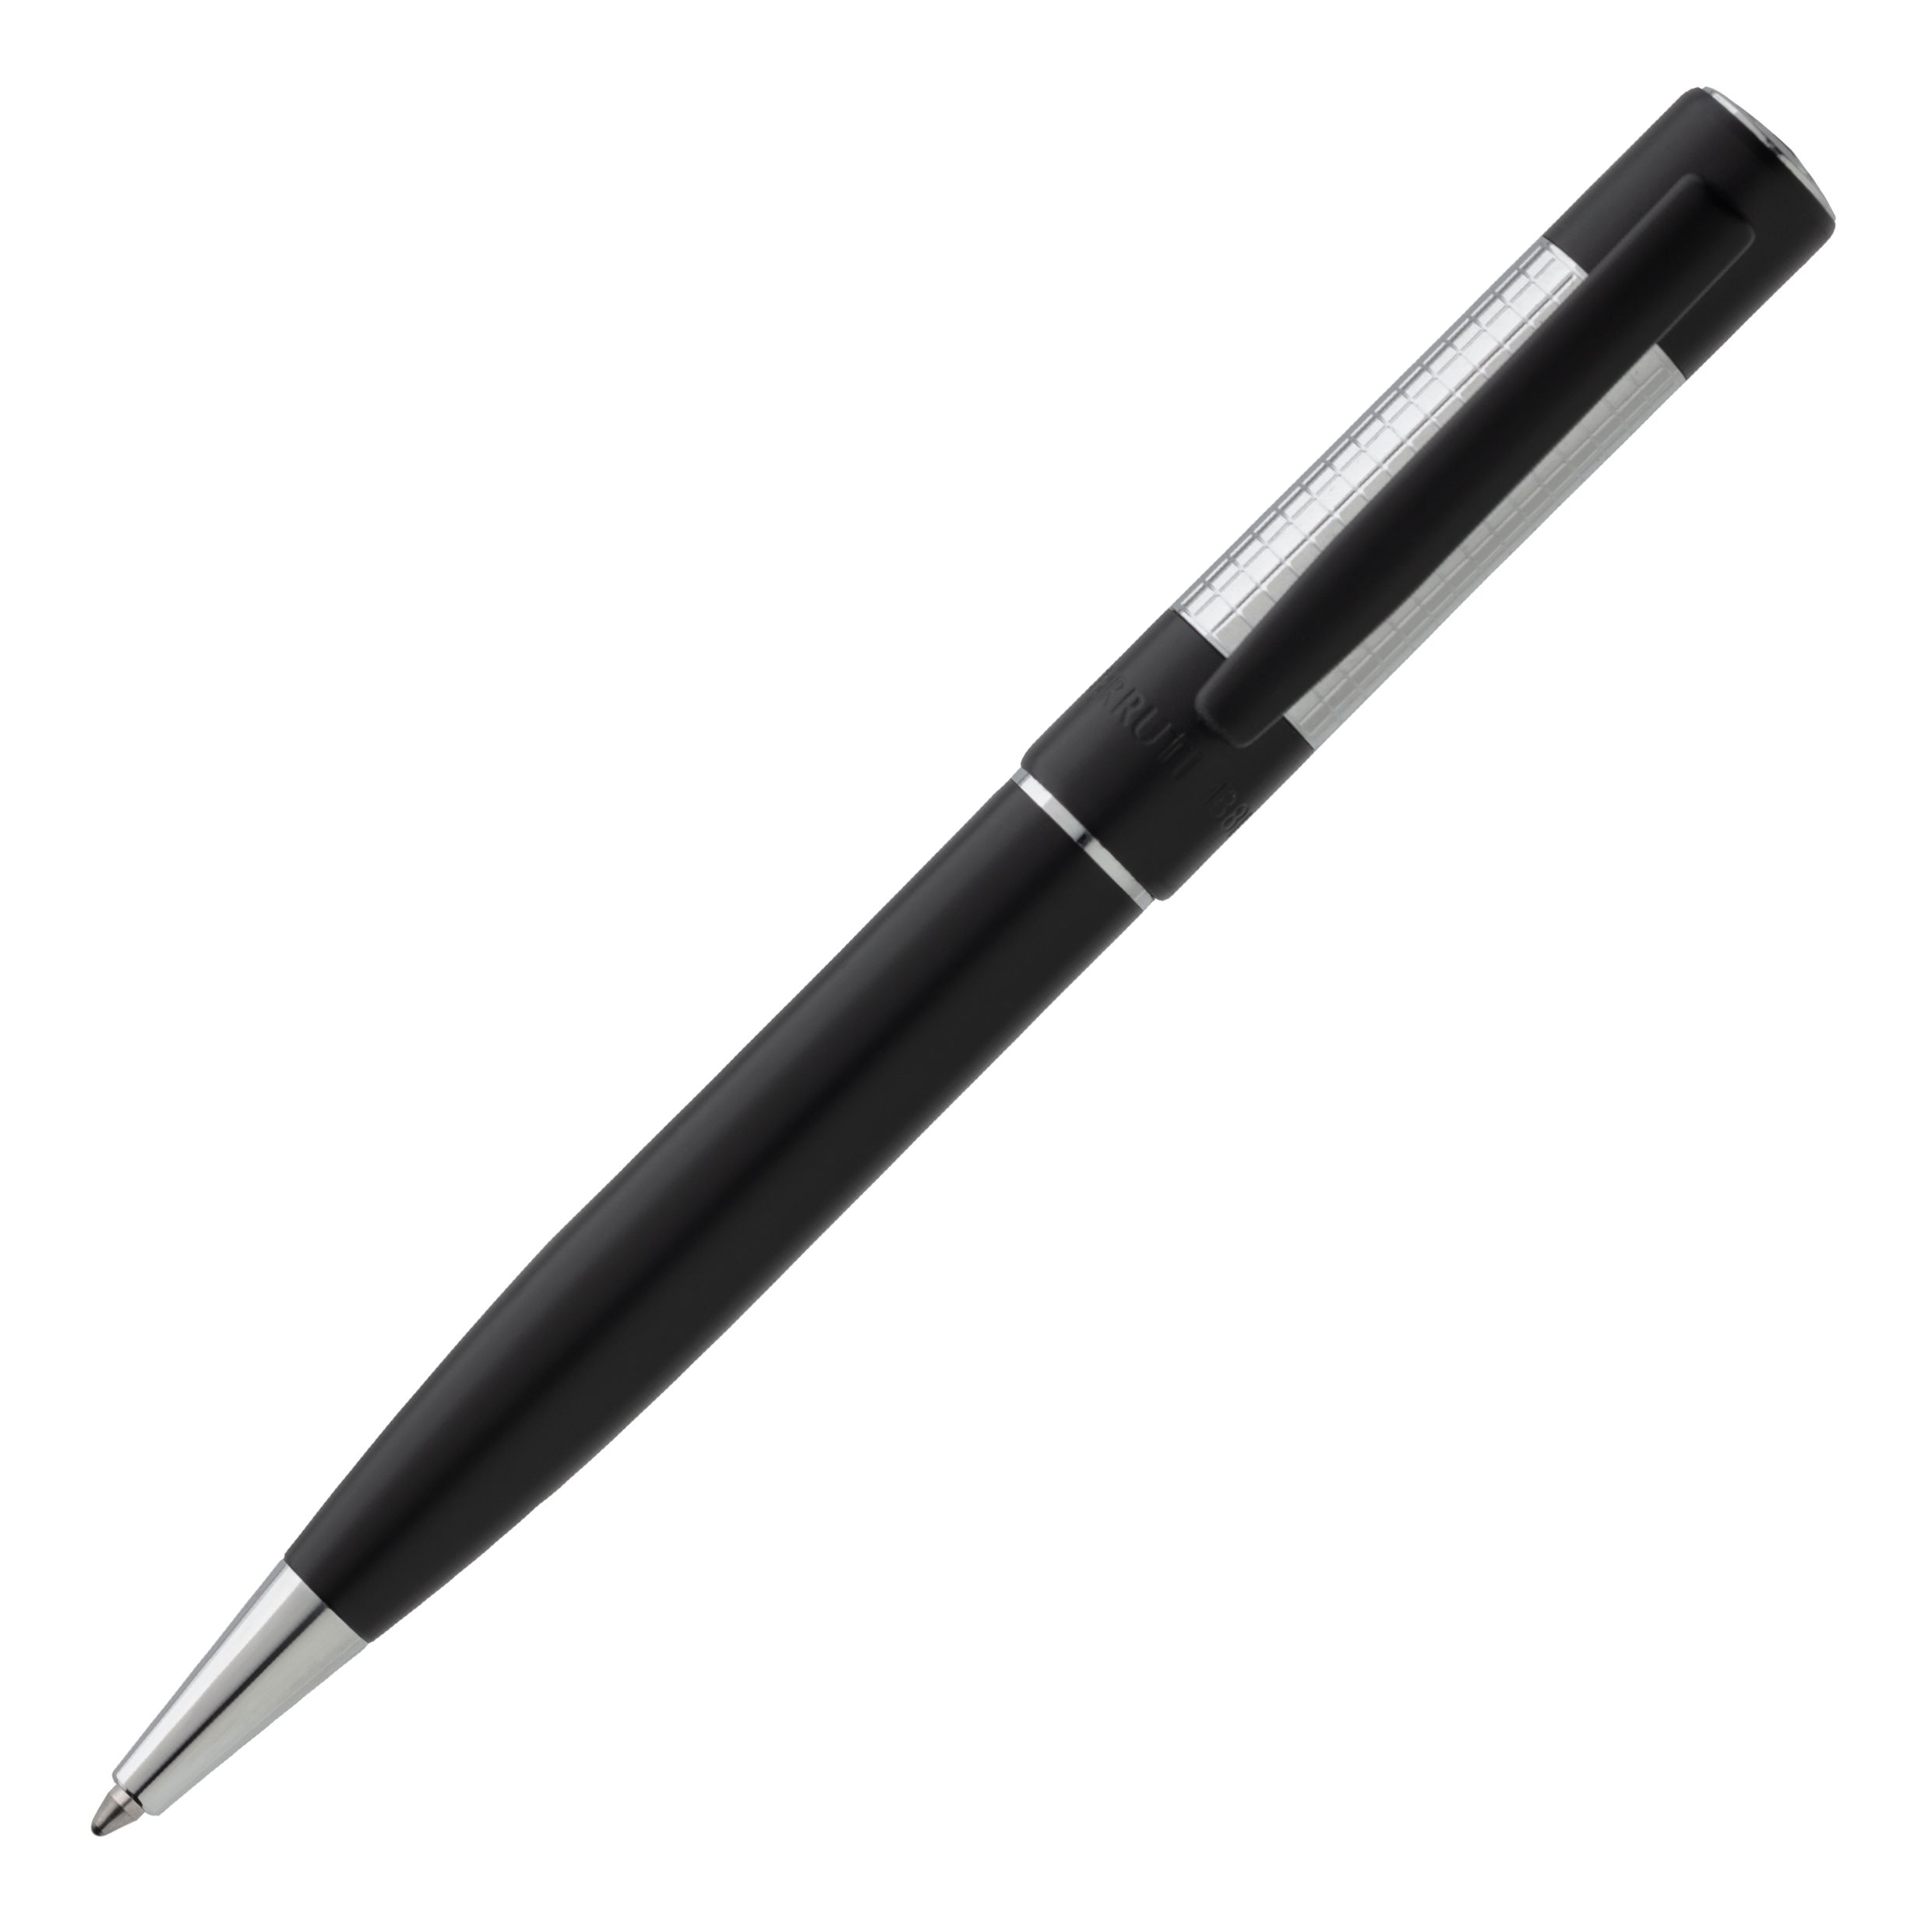 Cerruti lookbook ballpoint pen albion black